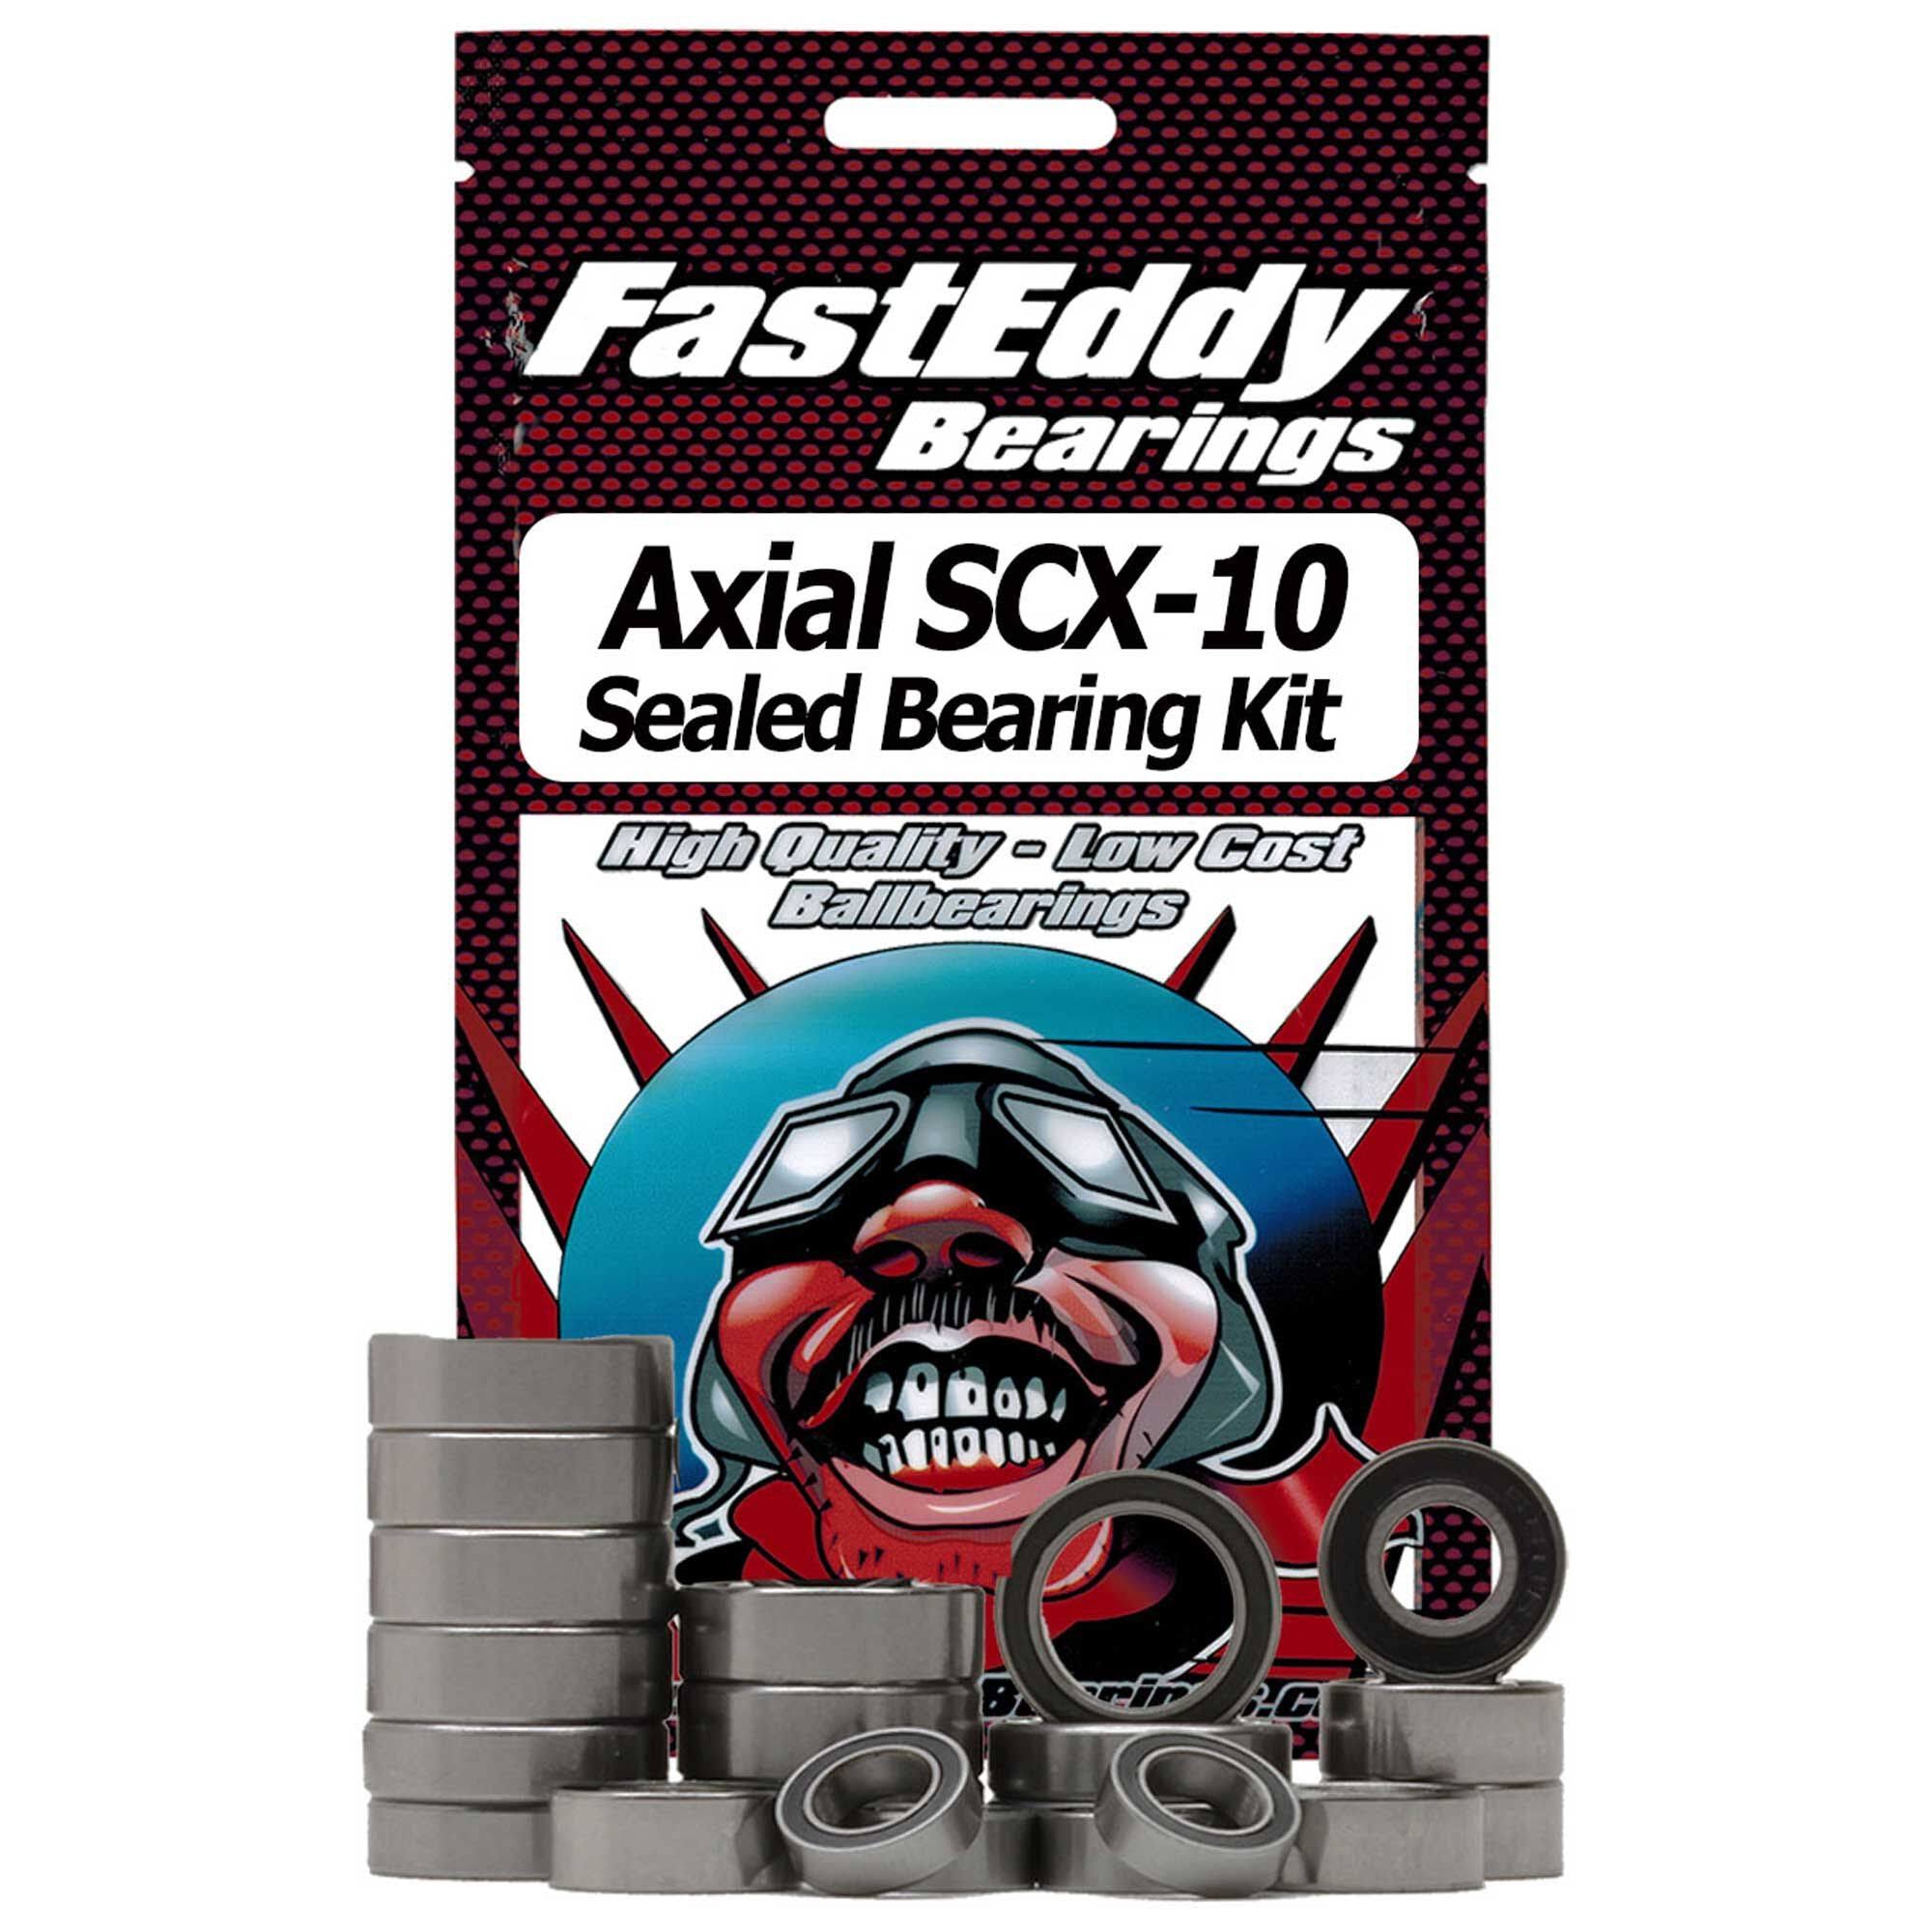 FastEddy Bearings Sealed Bearing Kit: Axial SCX10, TFE91